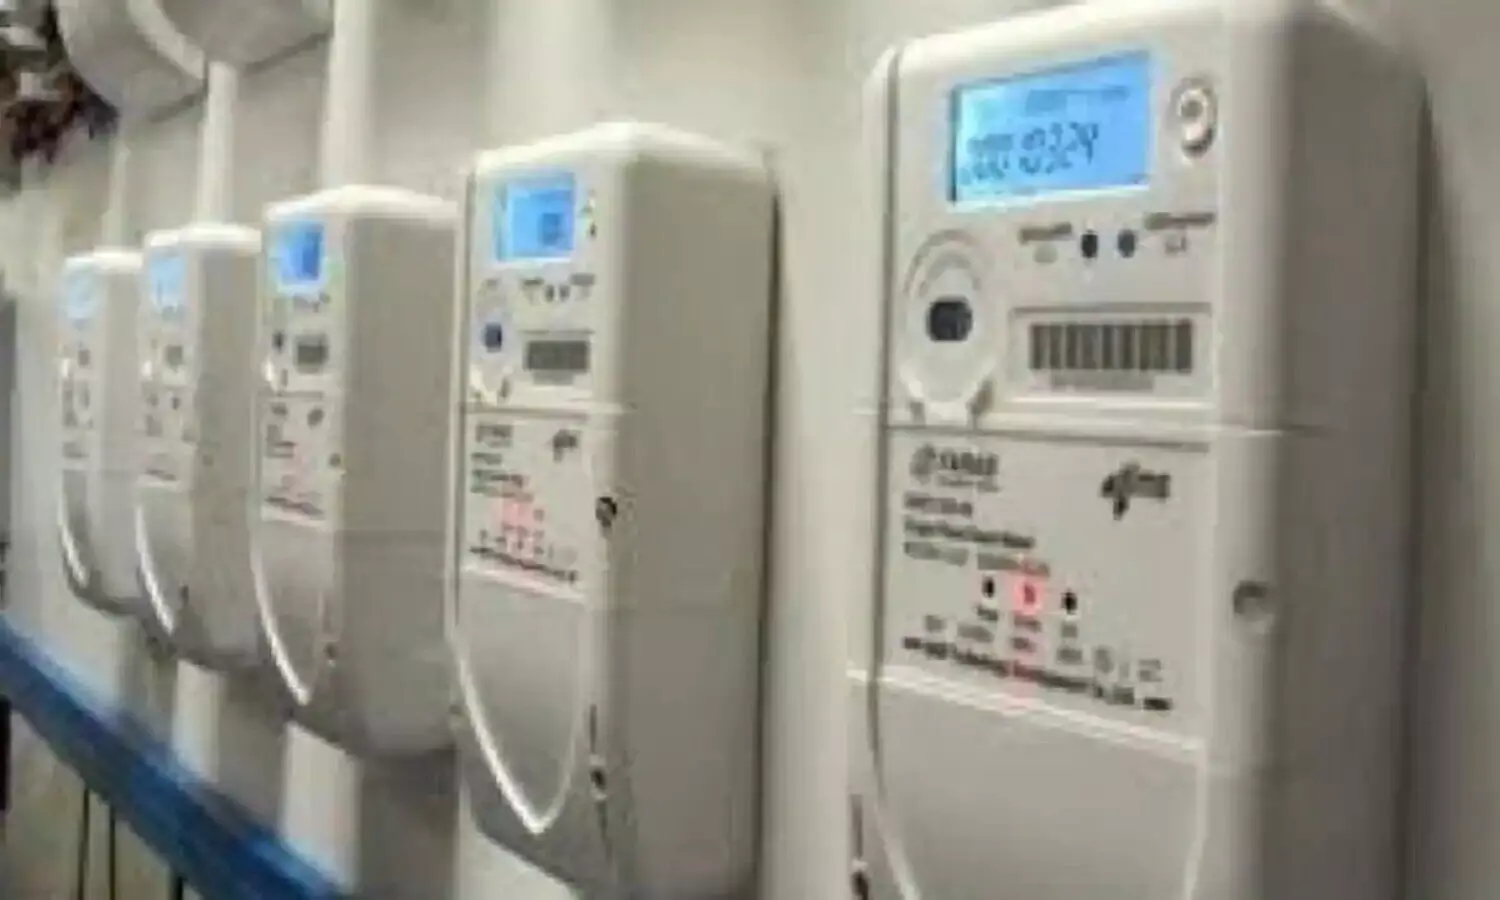 UP smart electricity meters